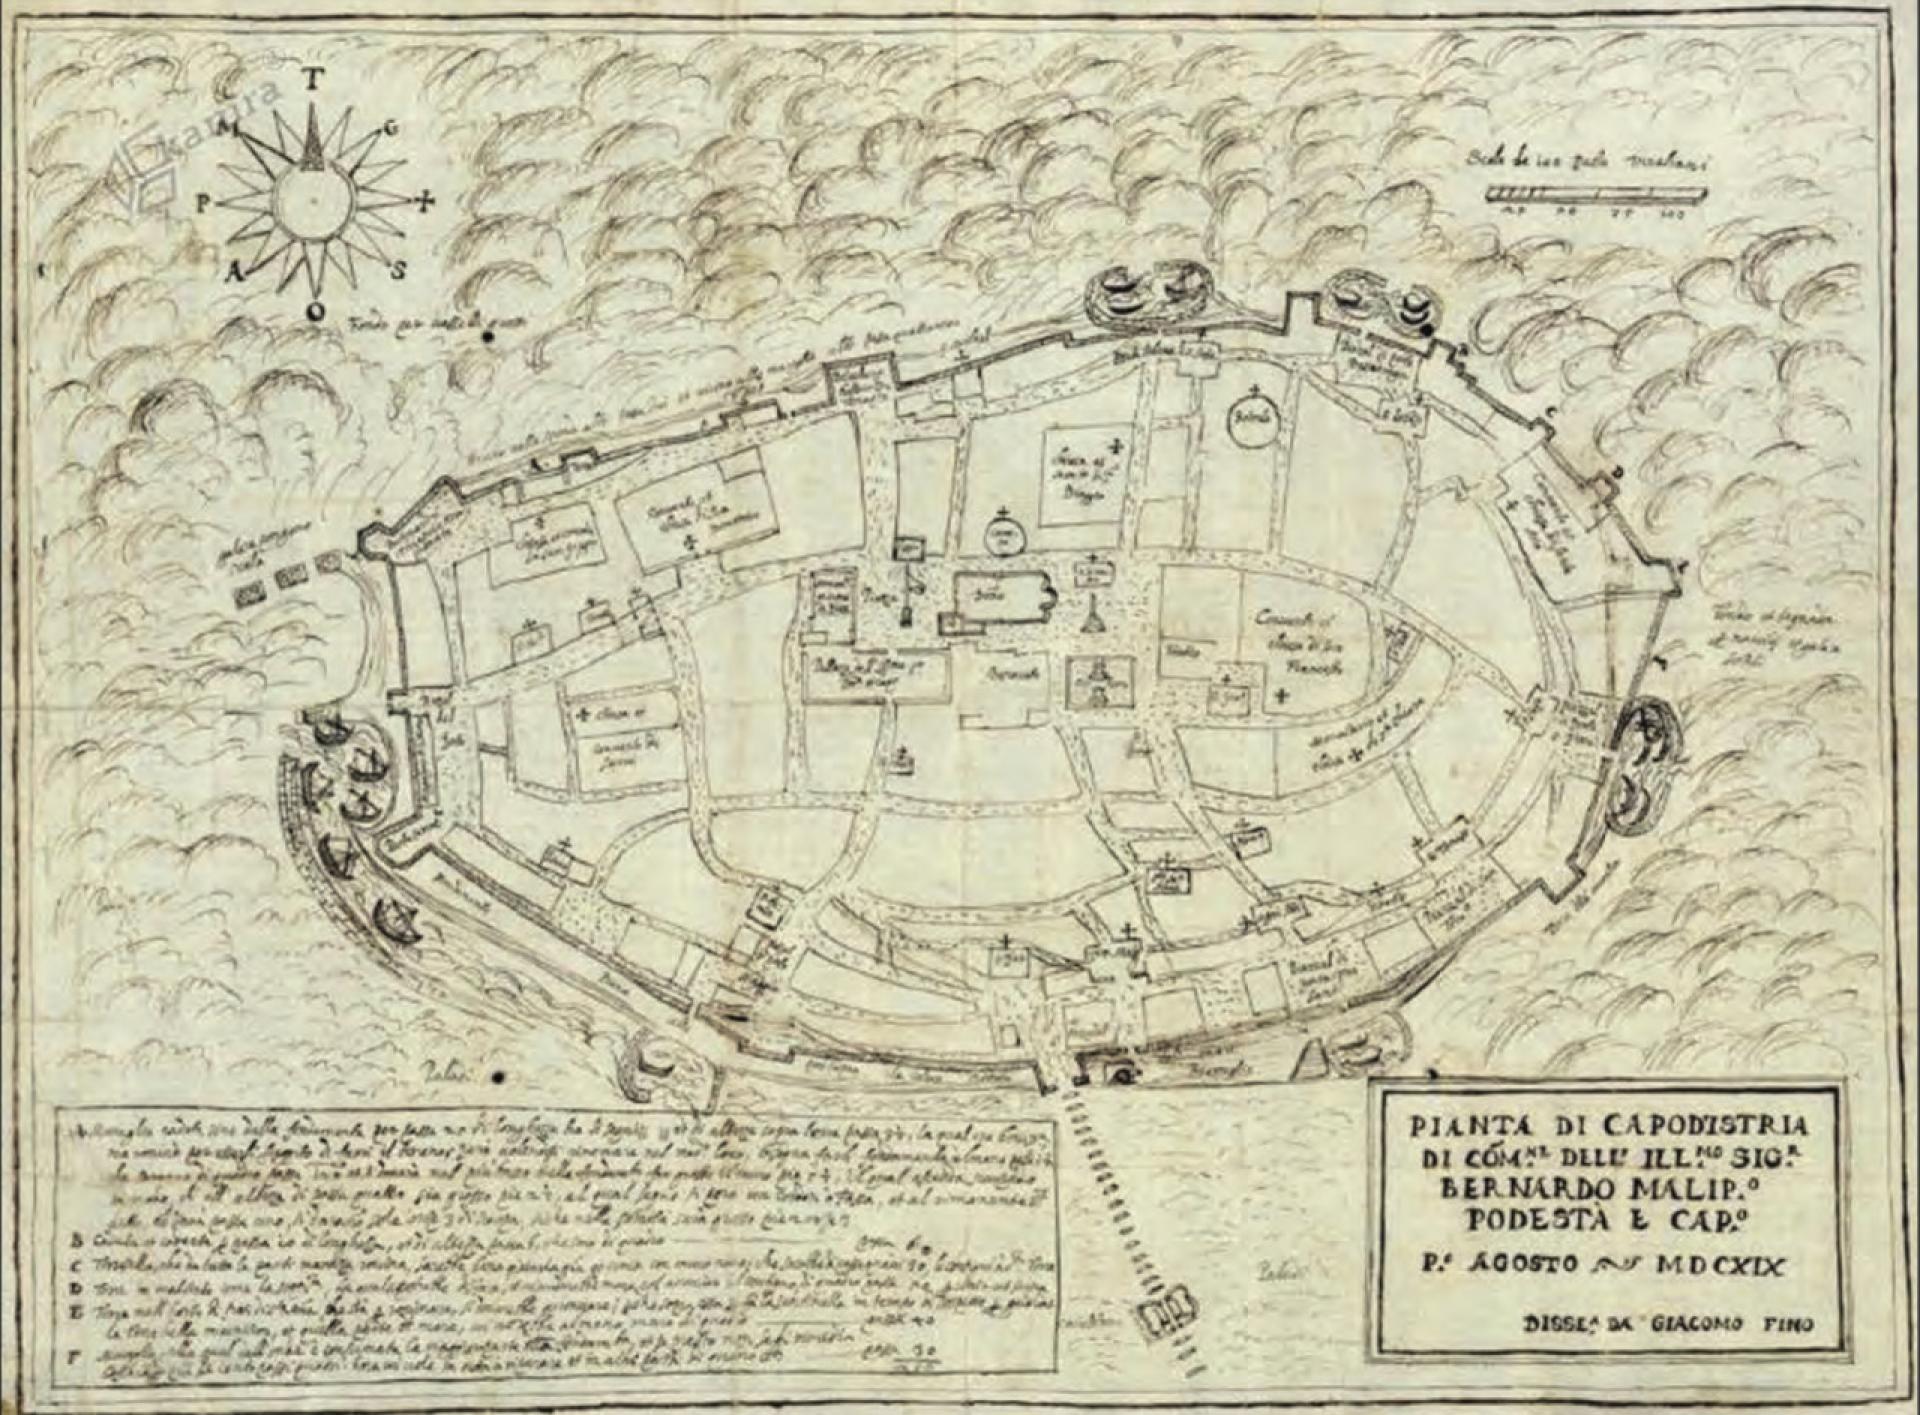 Plan of Giacomo Fino for Koper’s morphology, 1619. | Source HISTRIA